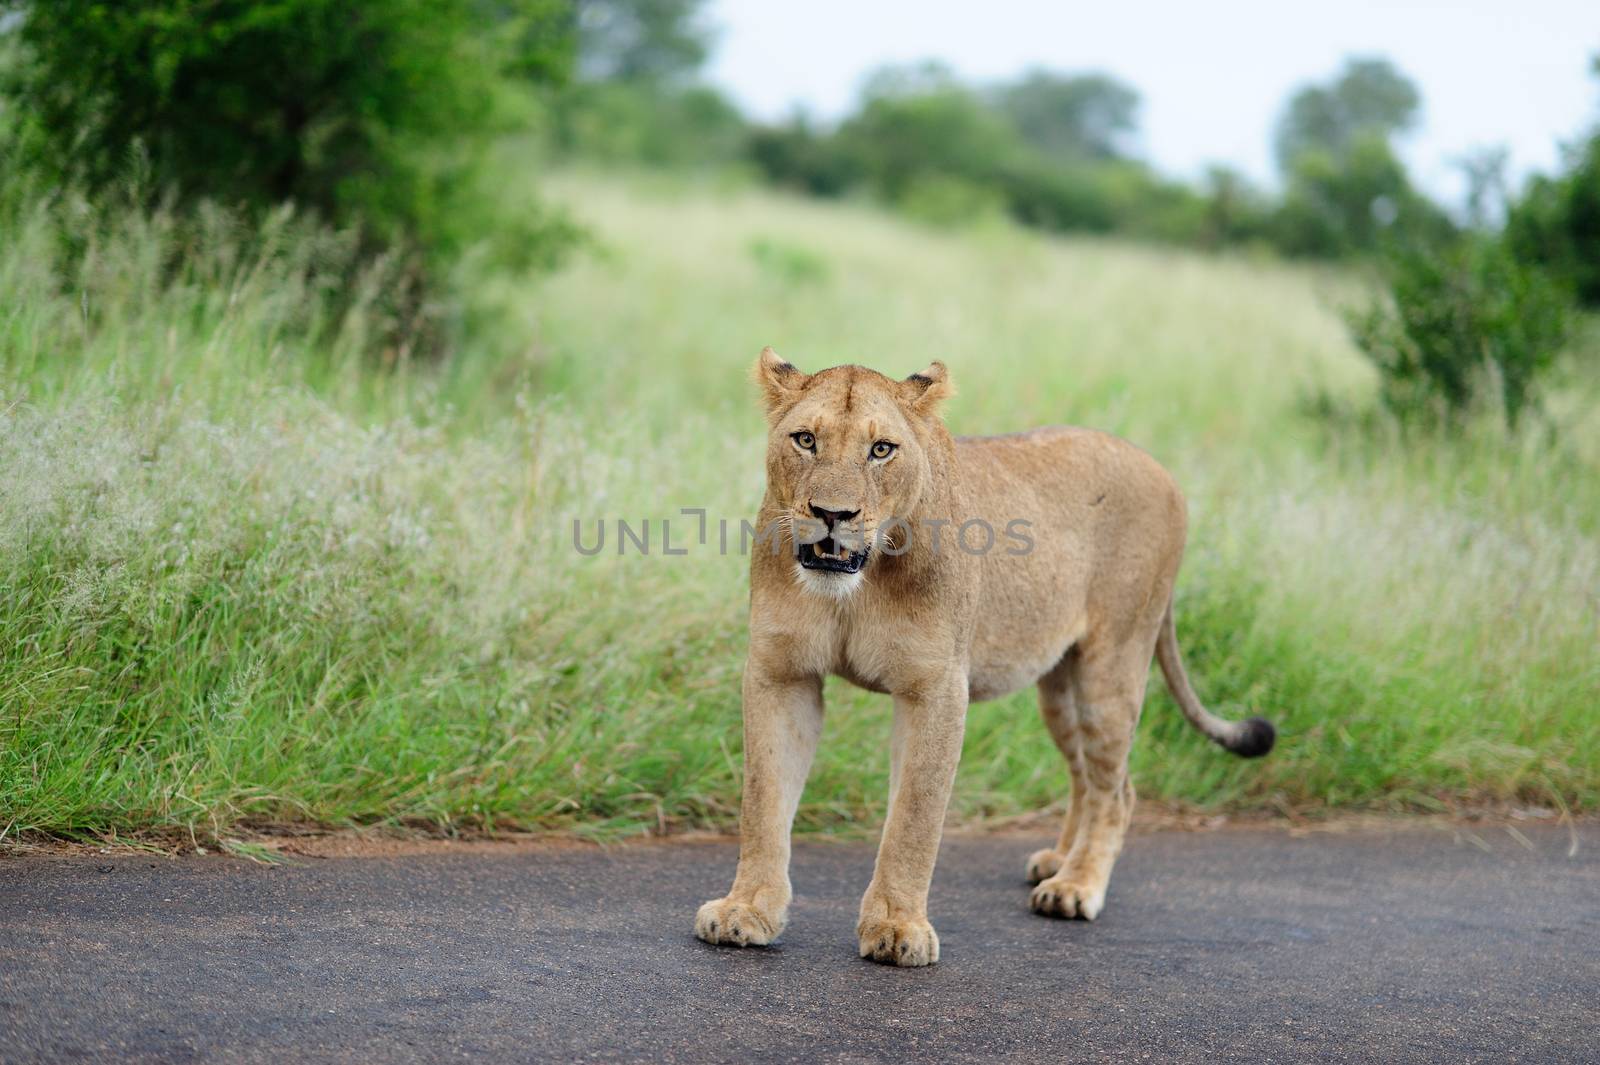 Lioness in the wilderness of Africa by ozkanzozmen